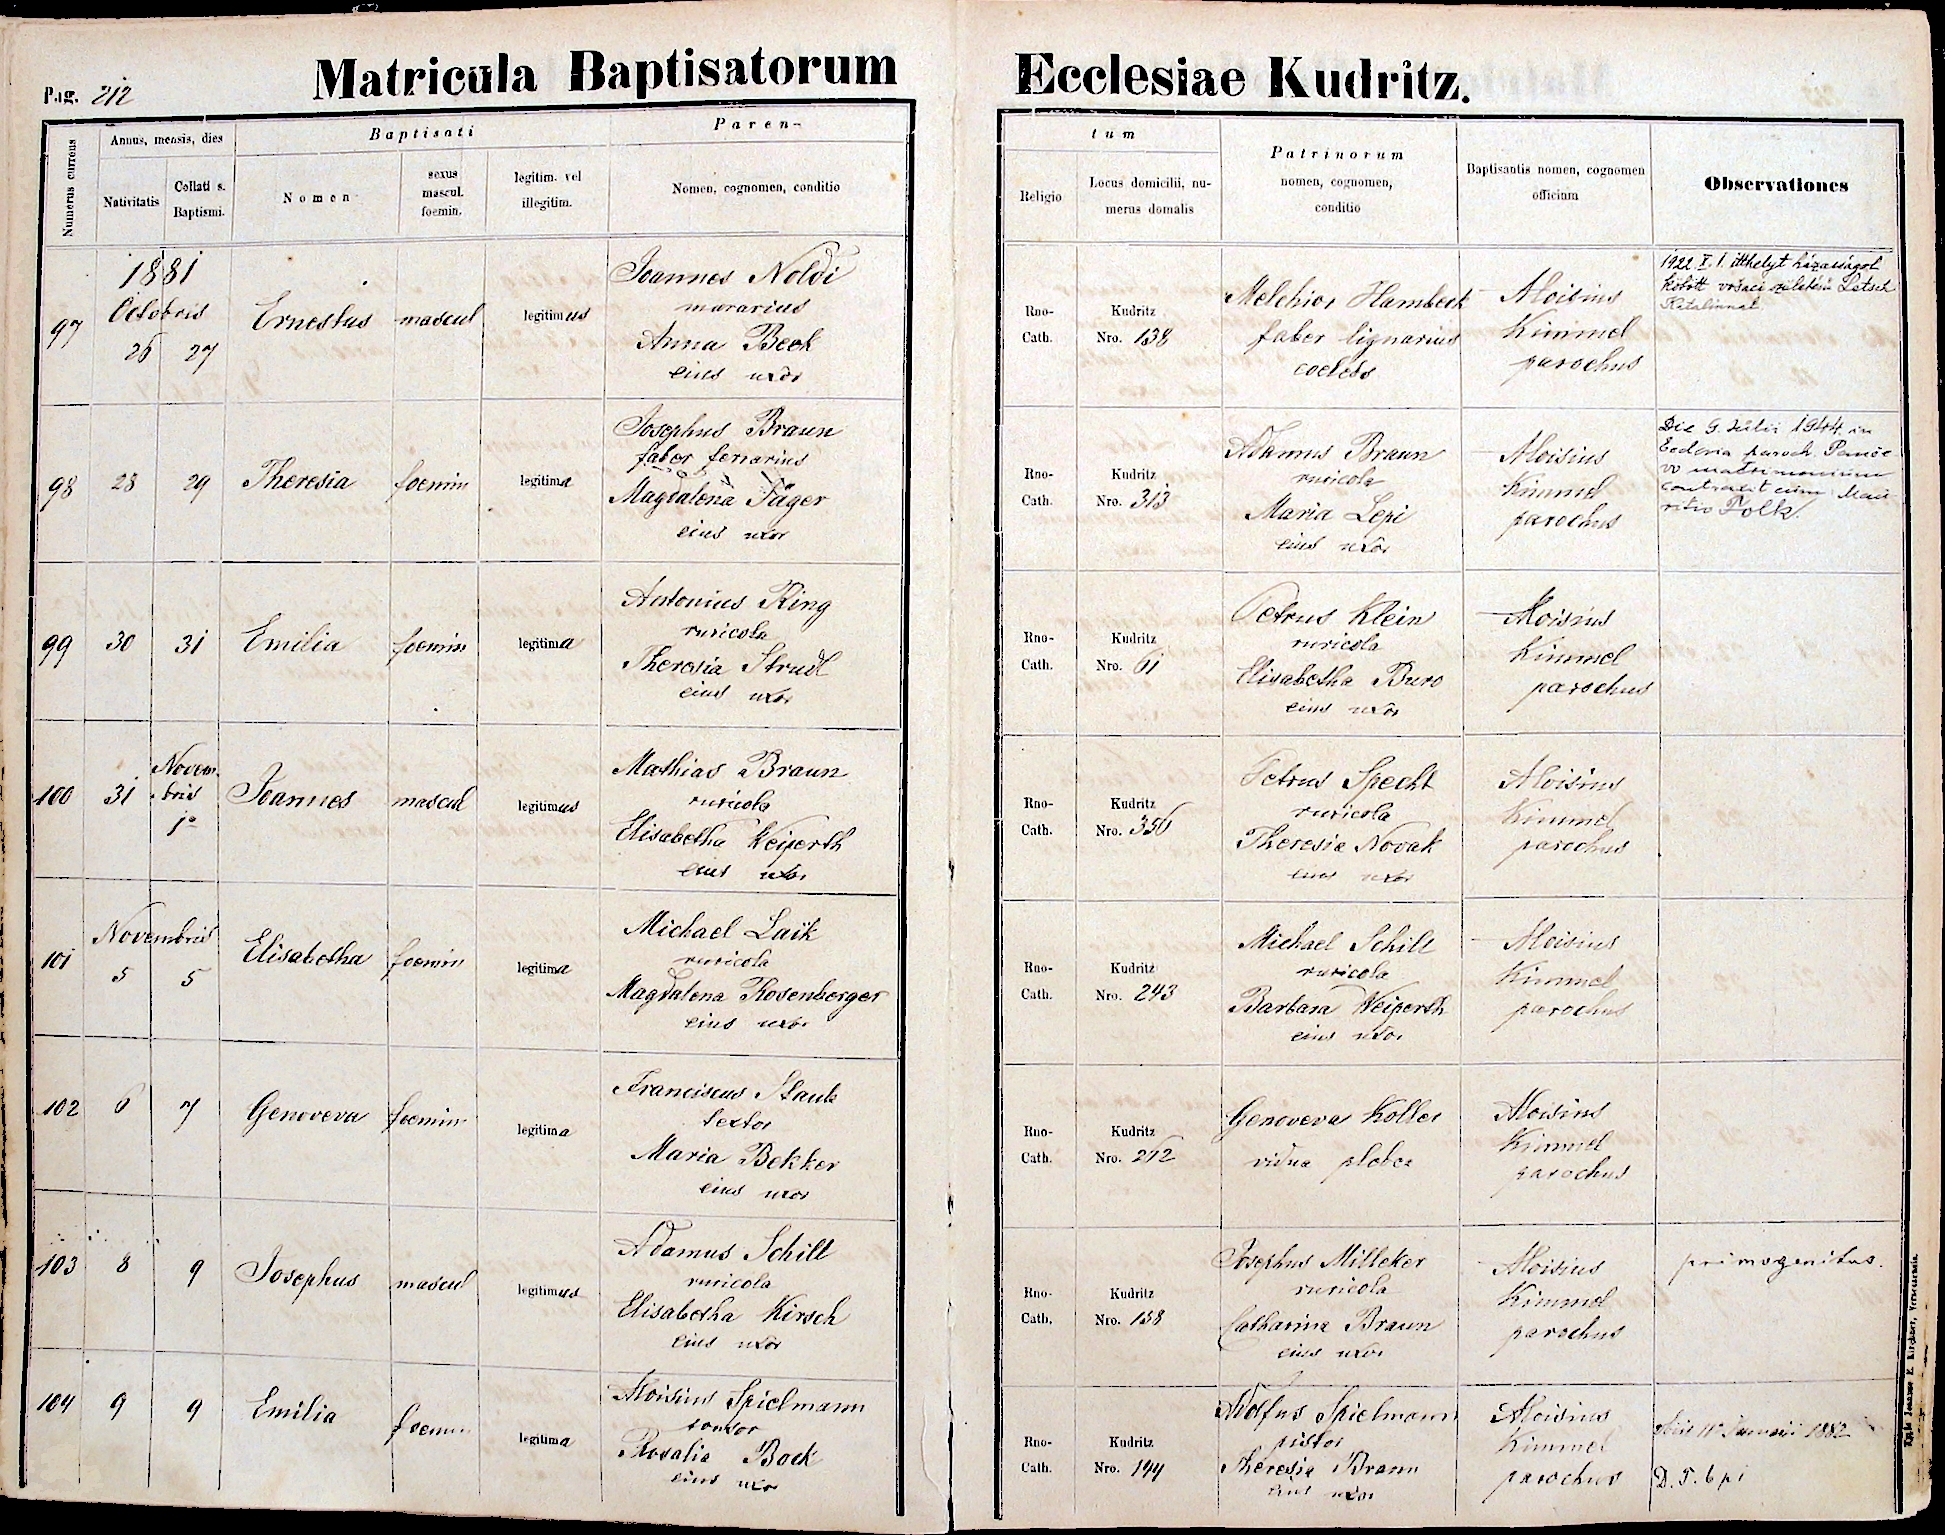 images/church_records/BIRTHS/1880-1883B/1881/212